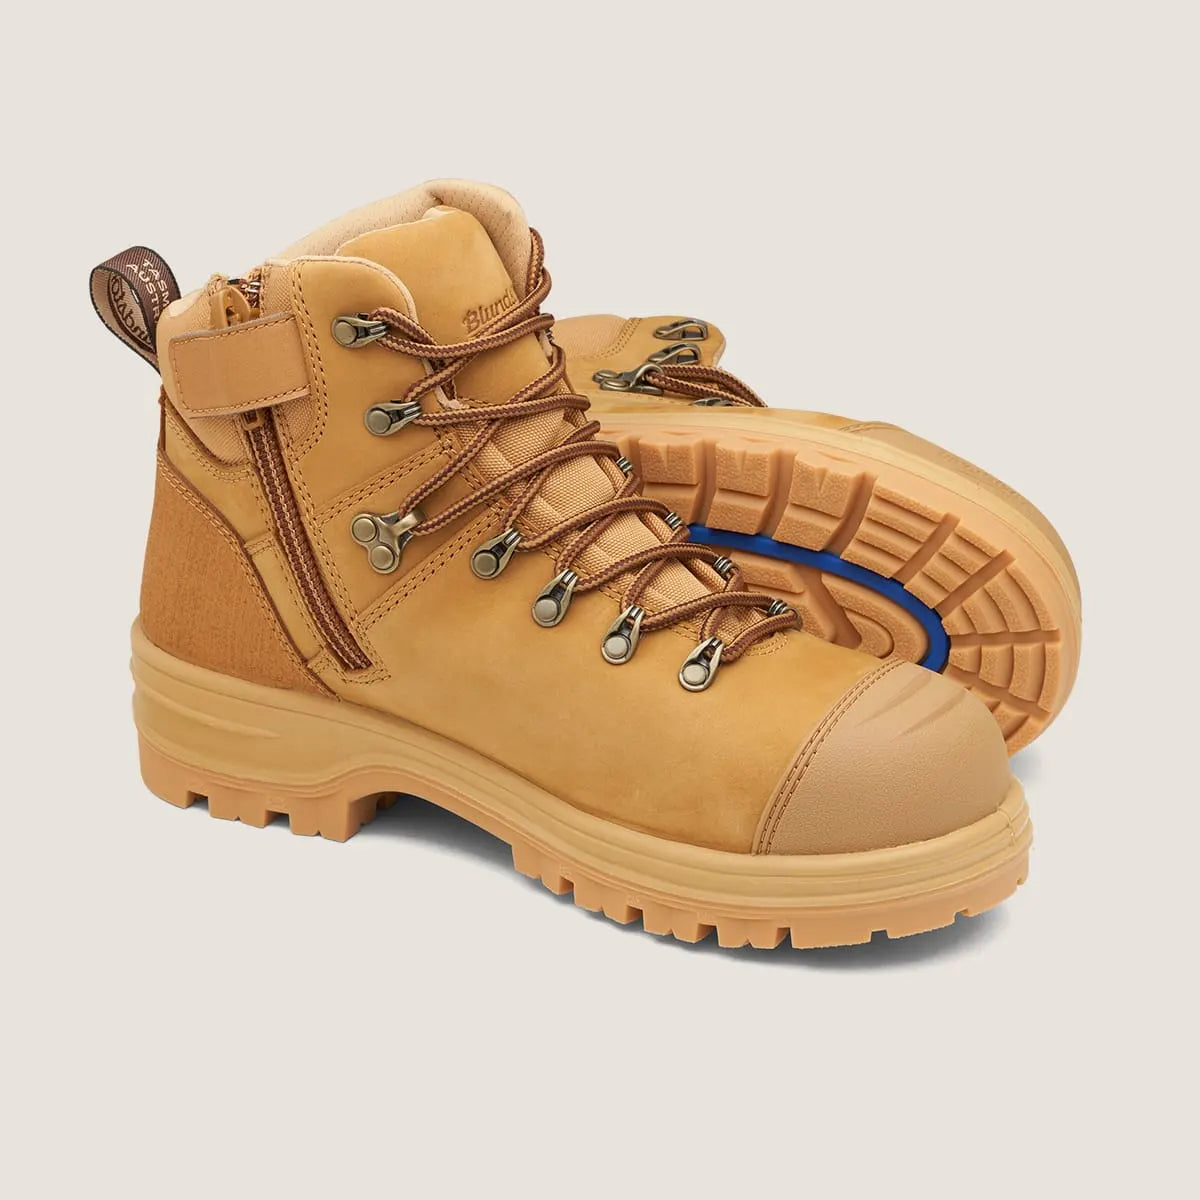 Blundstone 243 Unisex Zip Up Safety Boots-Wheat